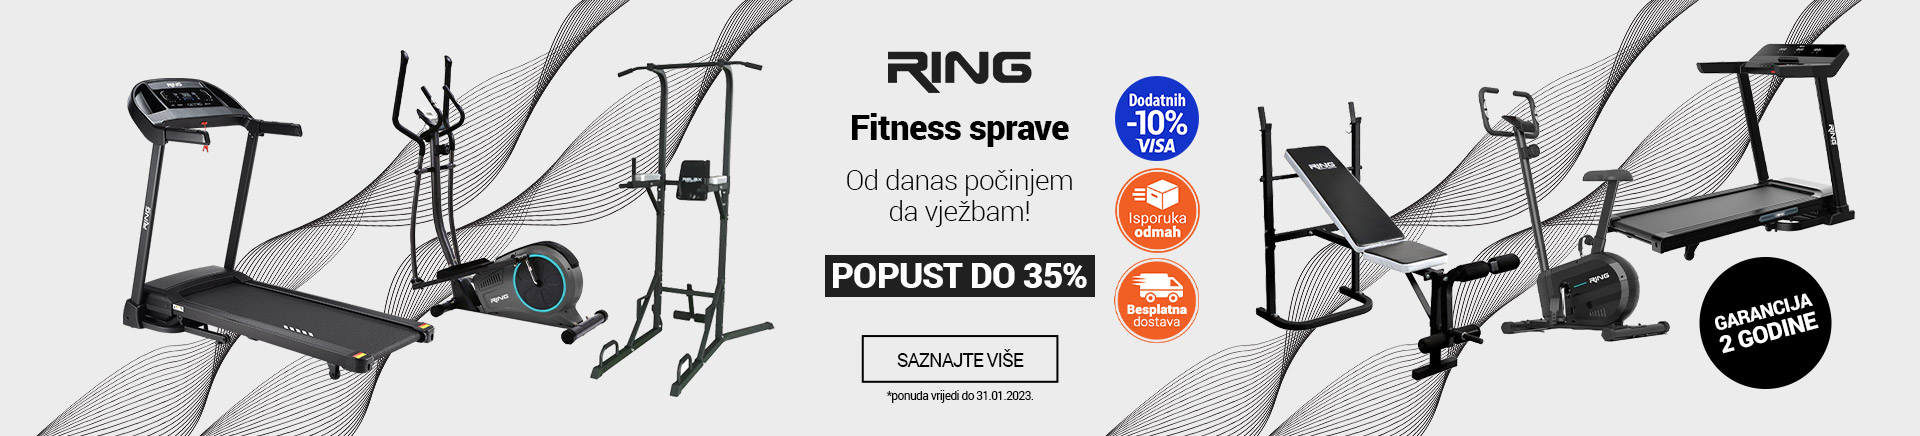 BA Ring Fitness sprave MOBILE 380 X 436.jpg